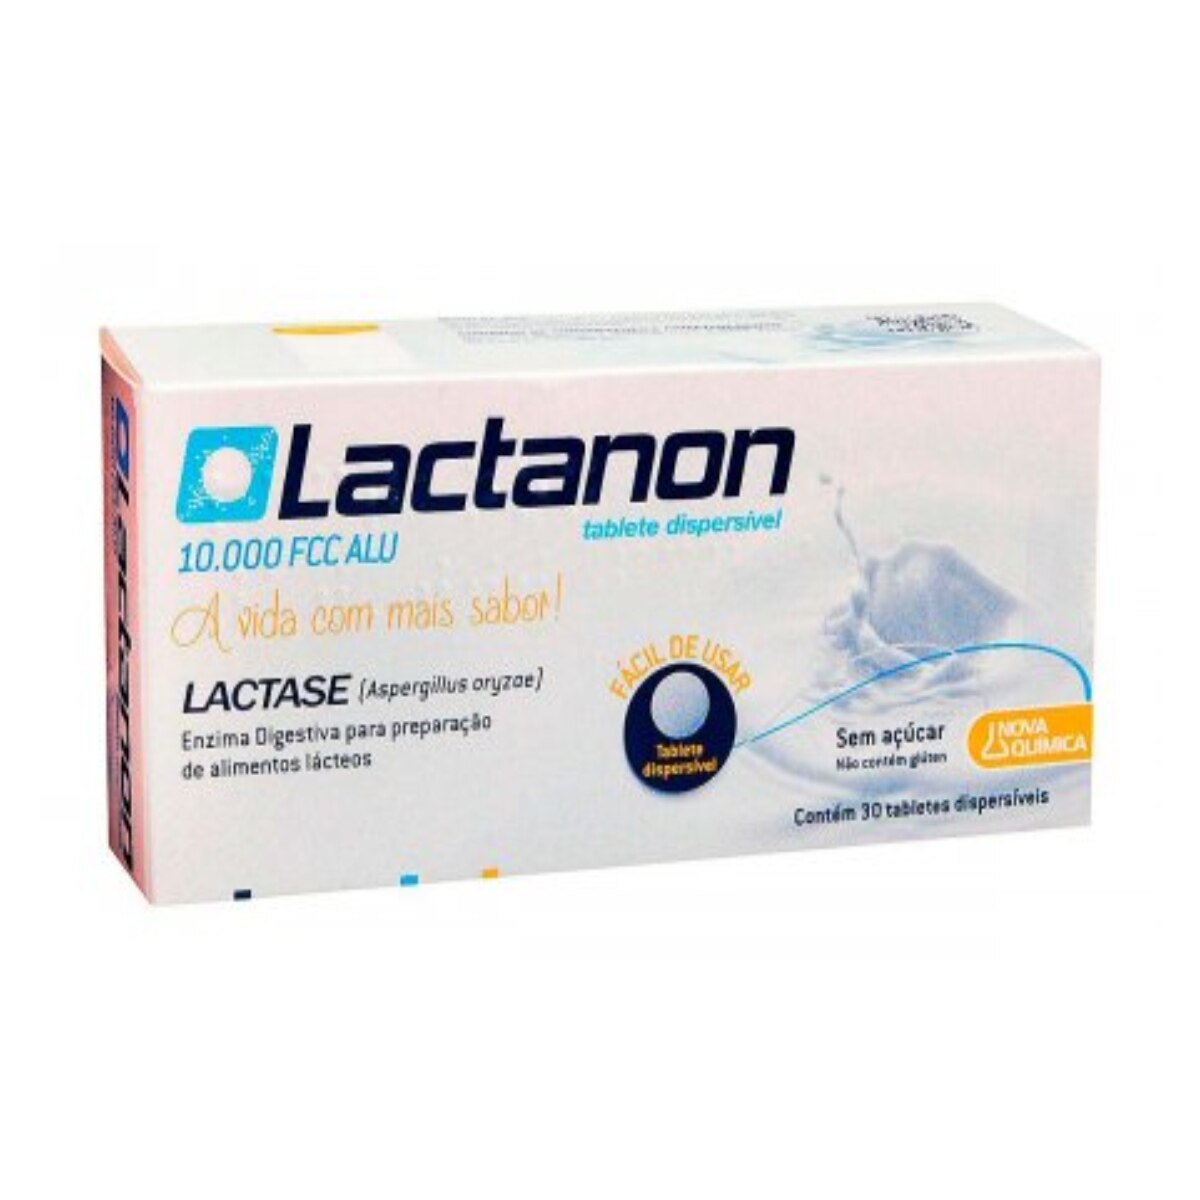 Lactanon 10.000 FCC 30 Tabletes Dispersiveis